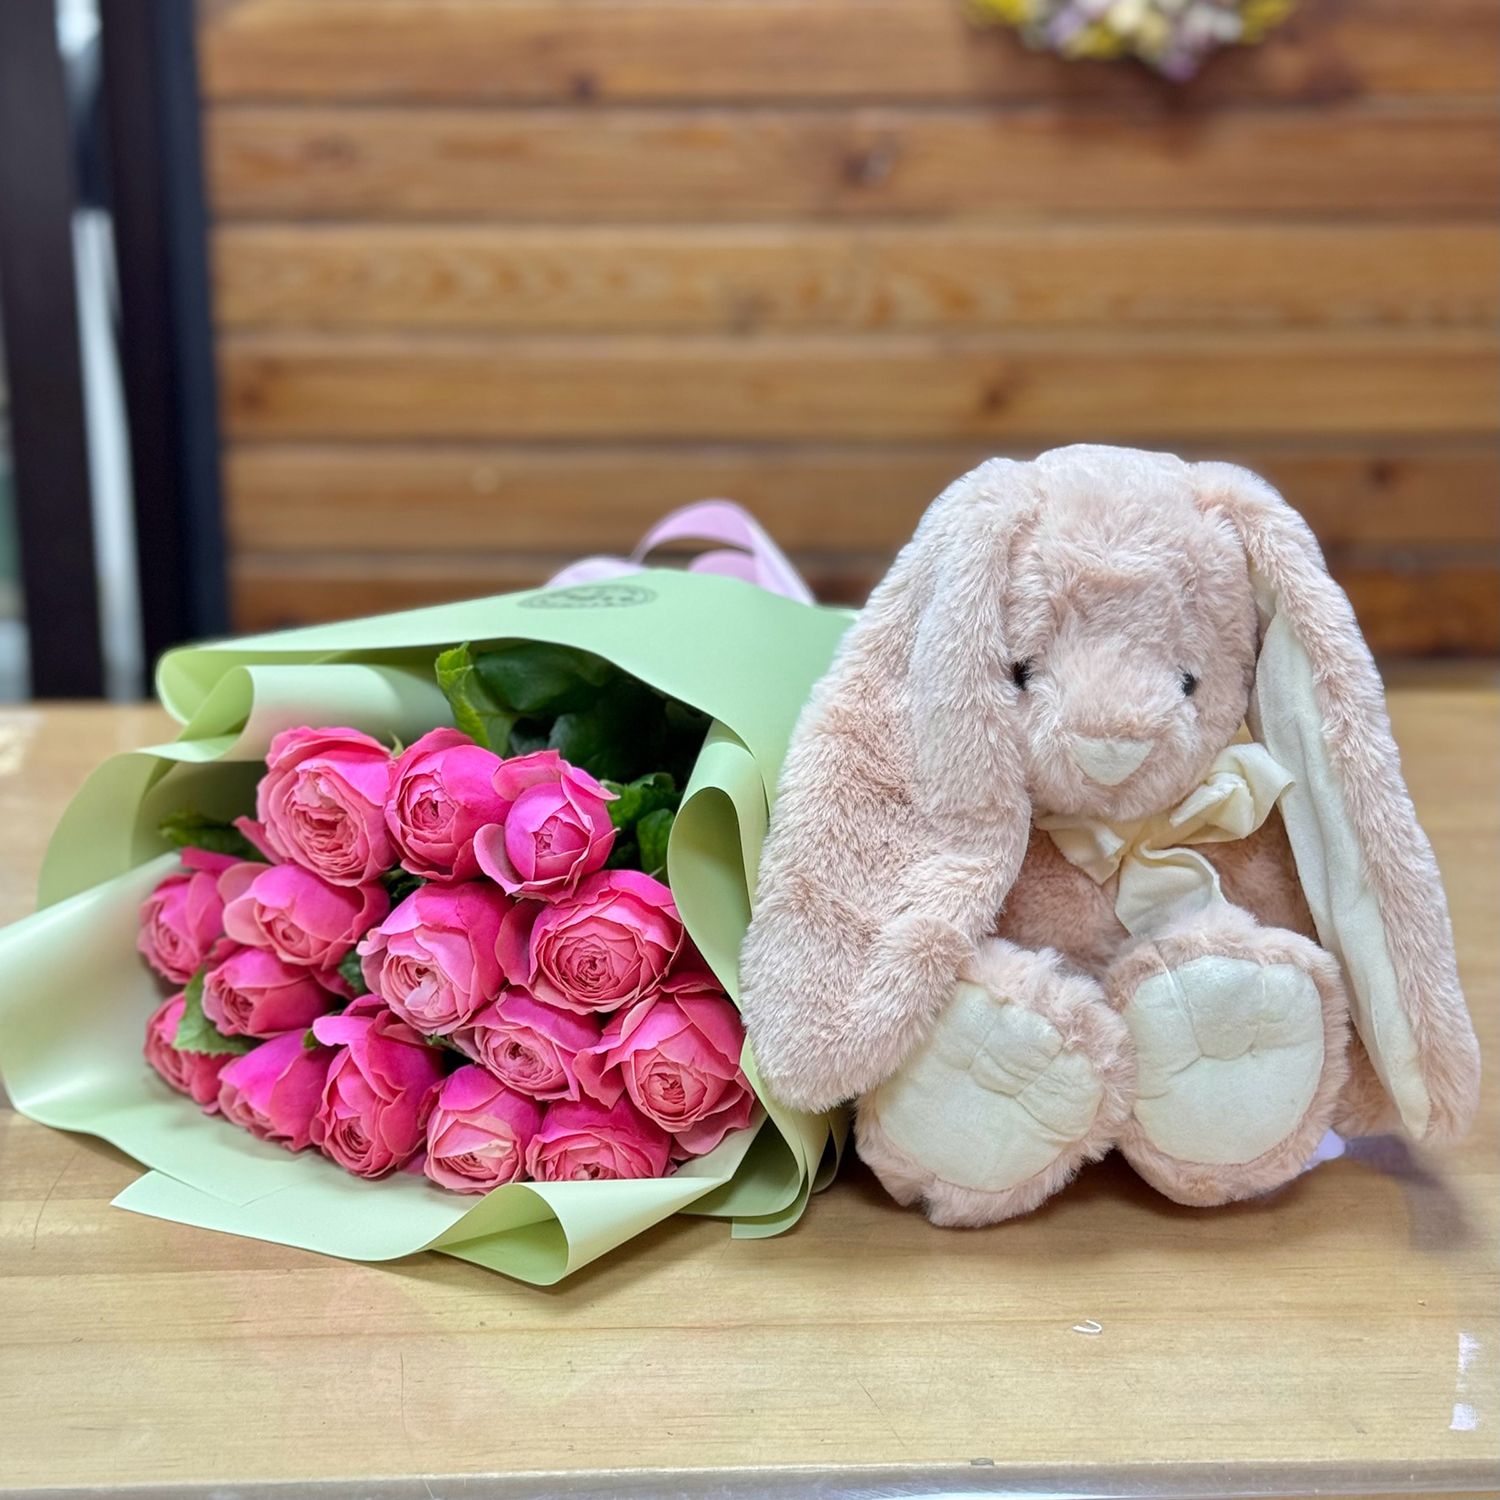 Pink roses and a bunny Tsyntsareny